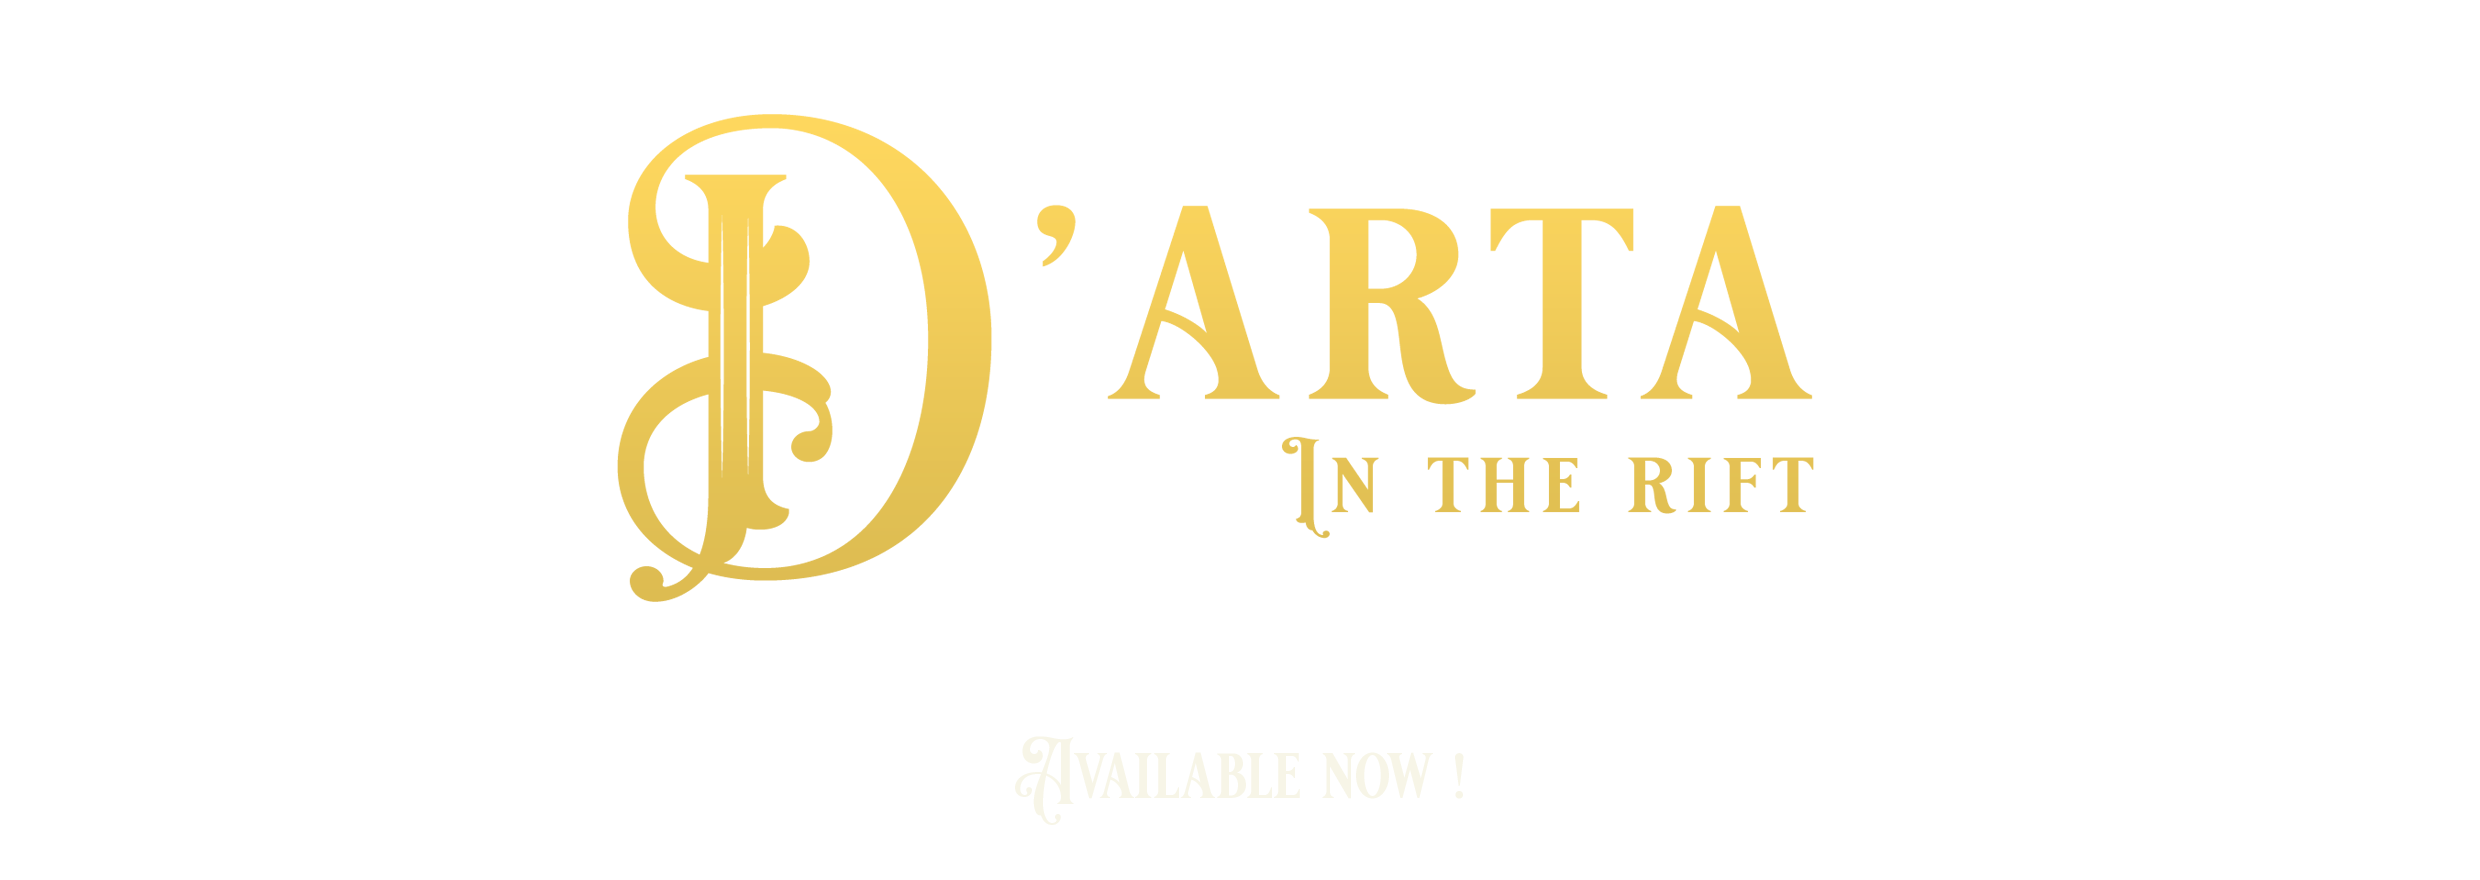 D'Arta in the rift